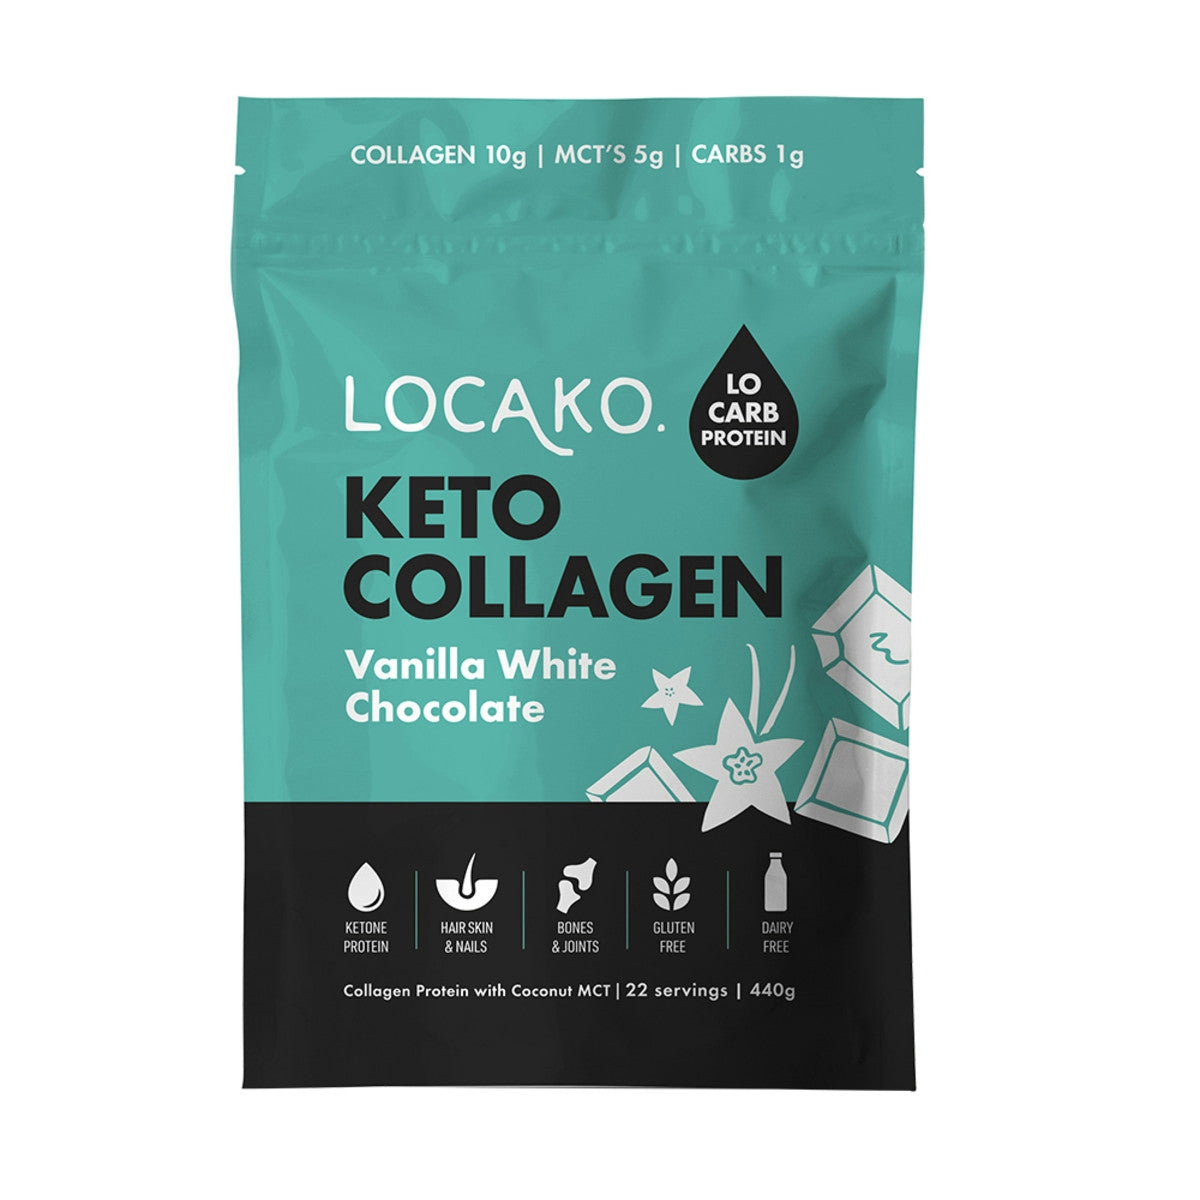 image of Locako Keto Collagen Vanilla White Chocolate (Collagen Protein with Coconut MCT) 440g on white background 